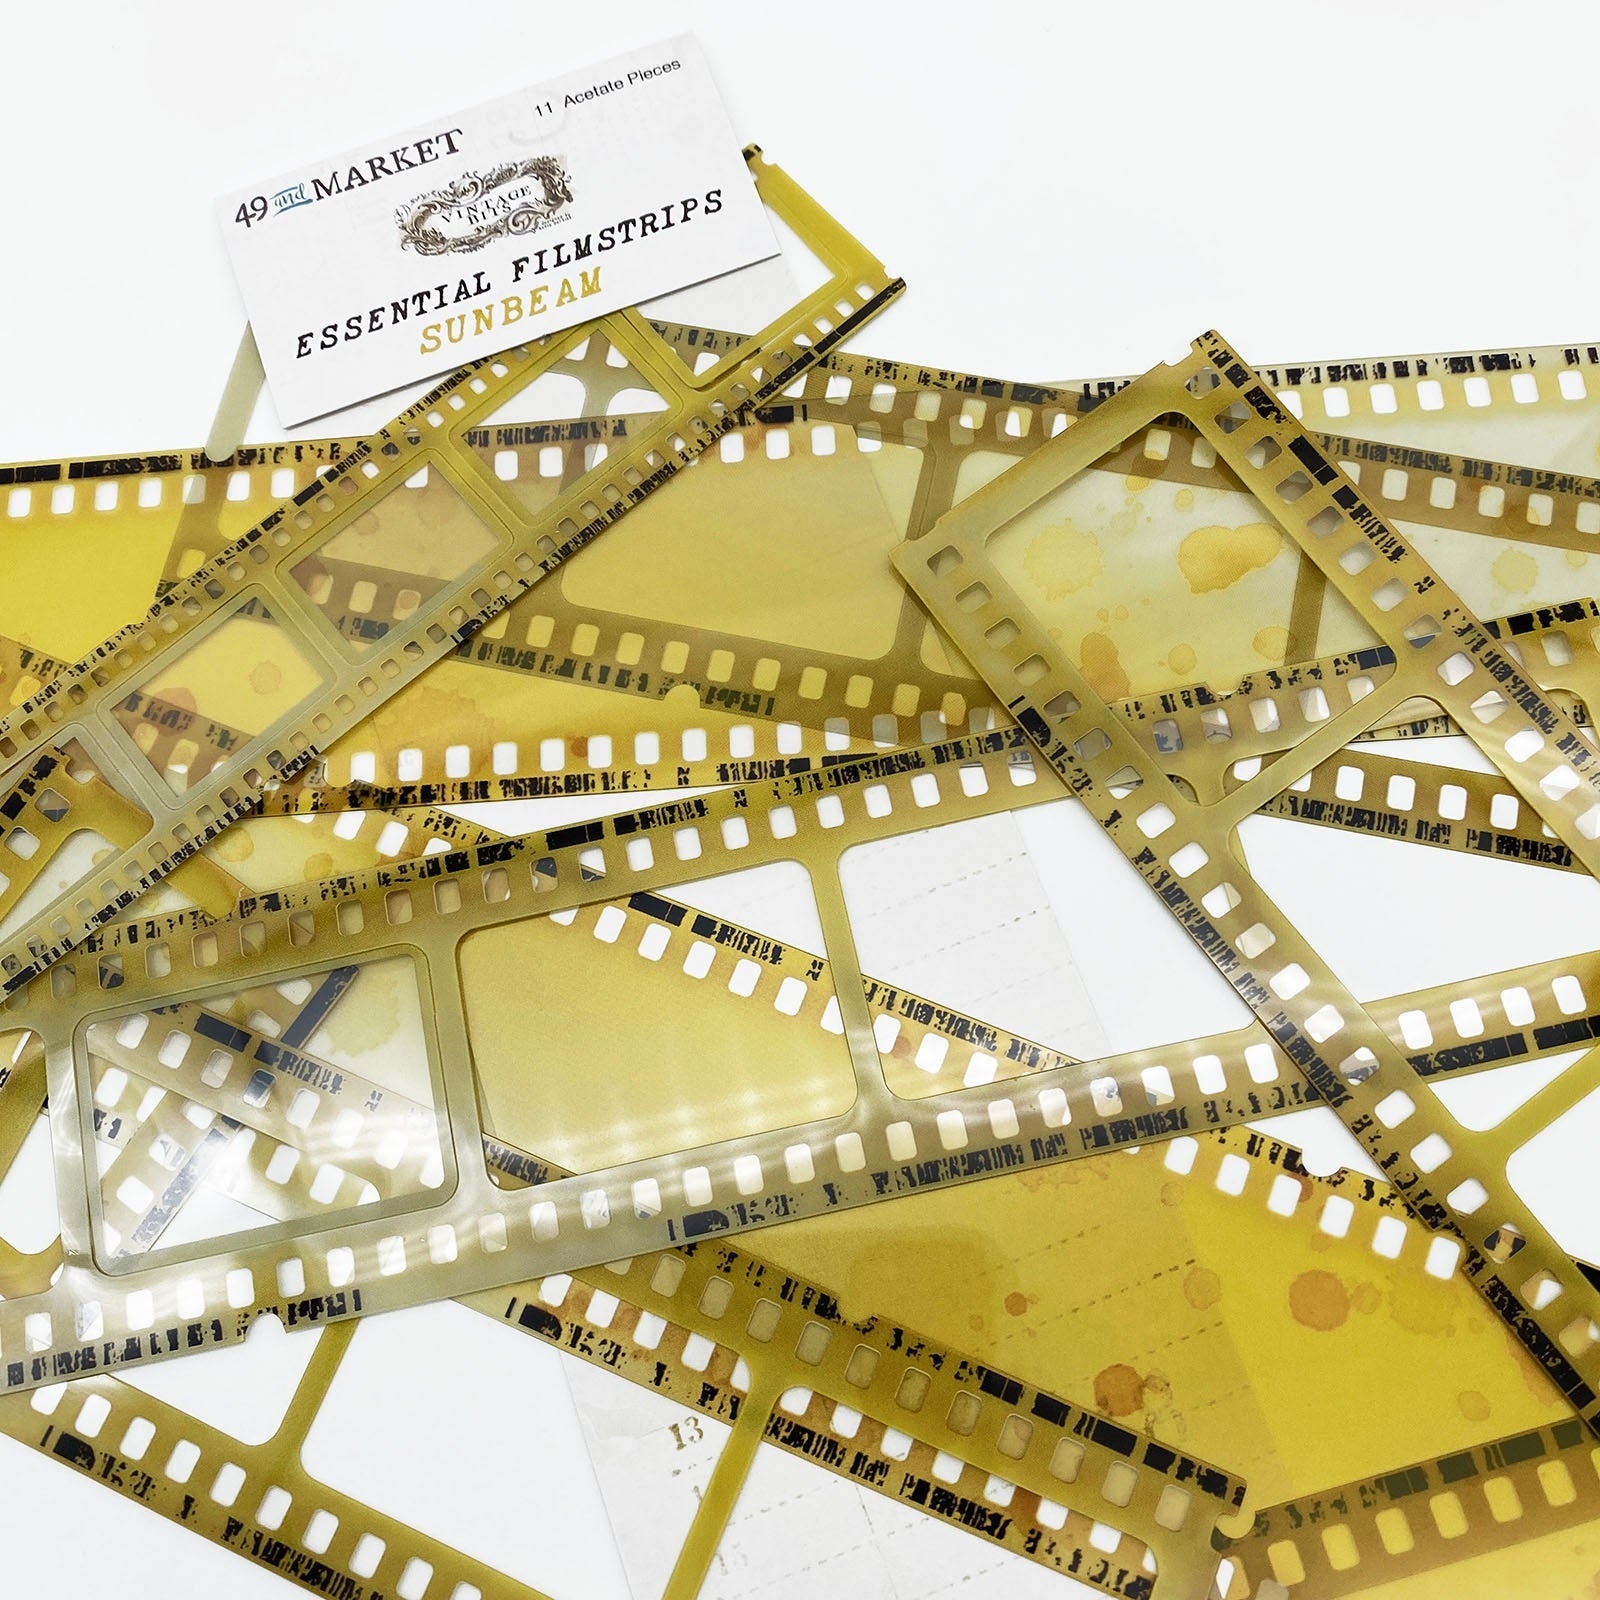 49 and Market Essential Film Strips - Sunbeam